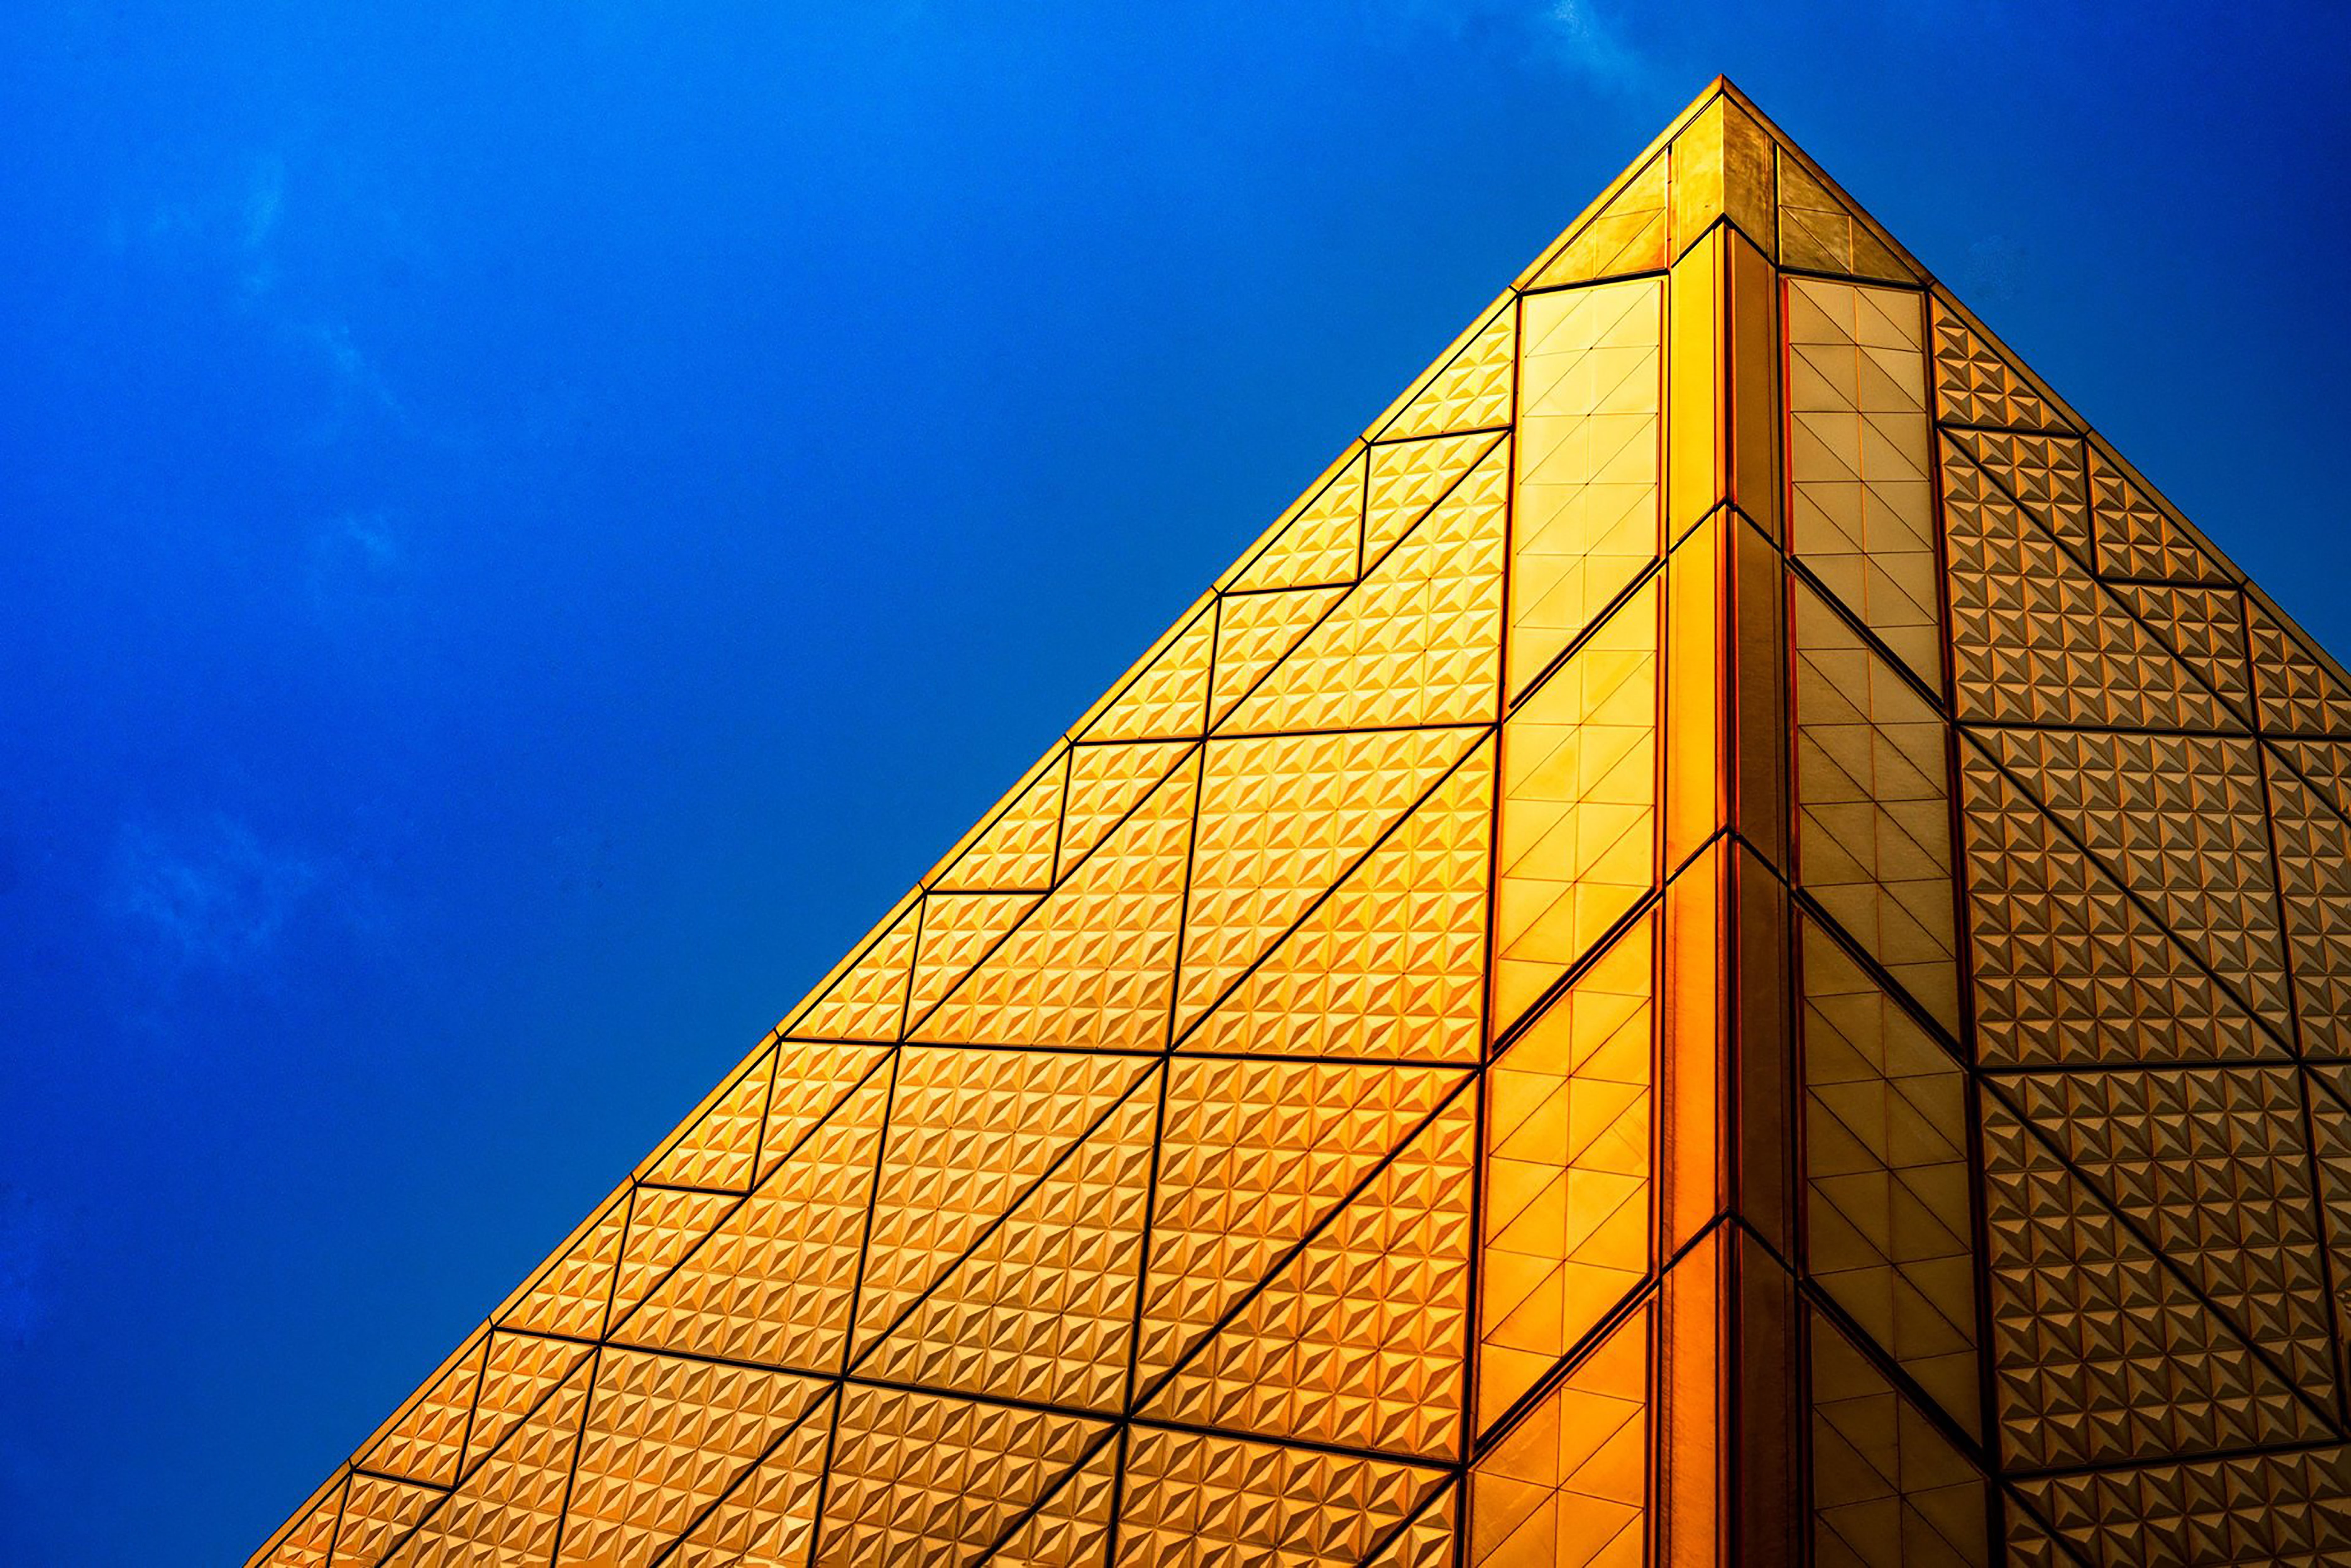 Pyramid Structure 4K Wallpaper, Golden, Blue Sky, Modern architecture